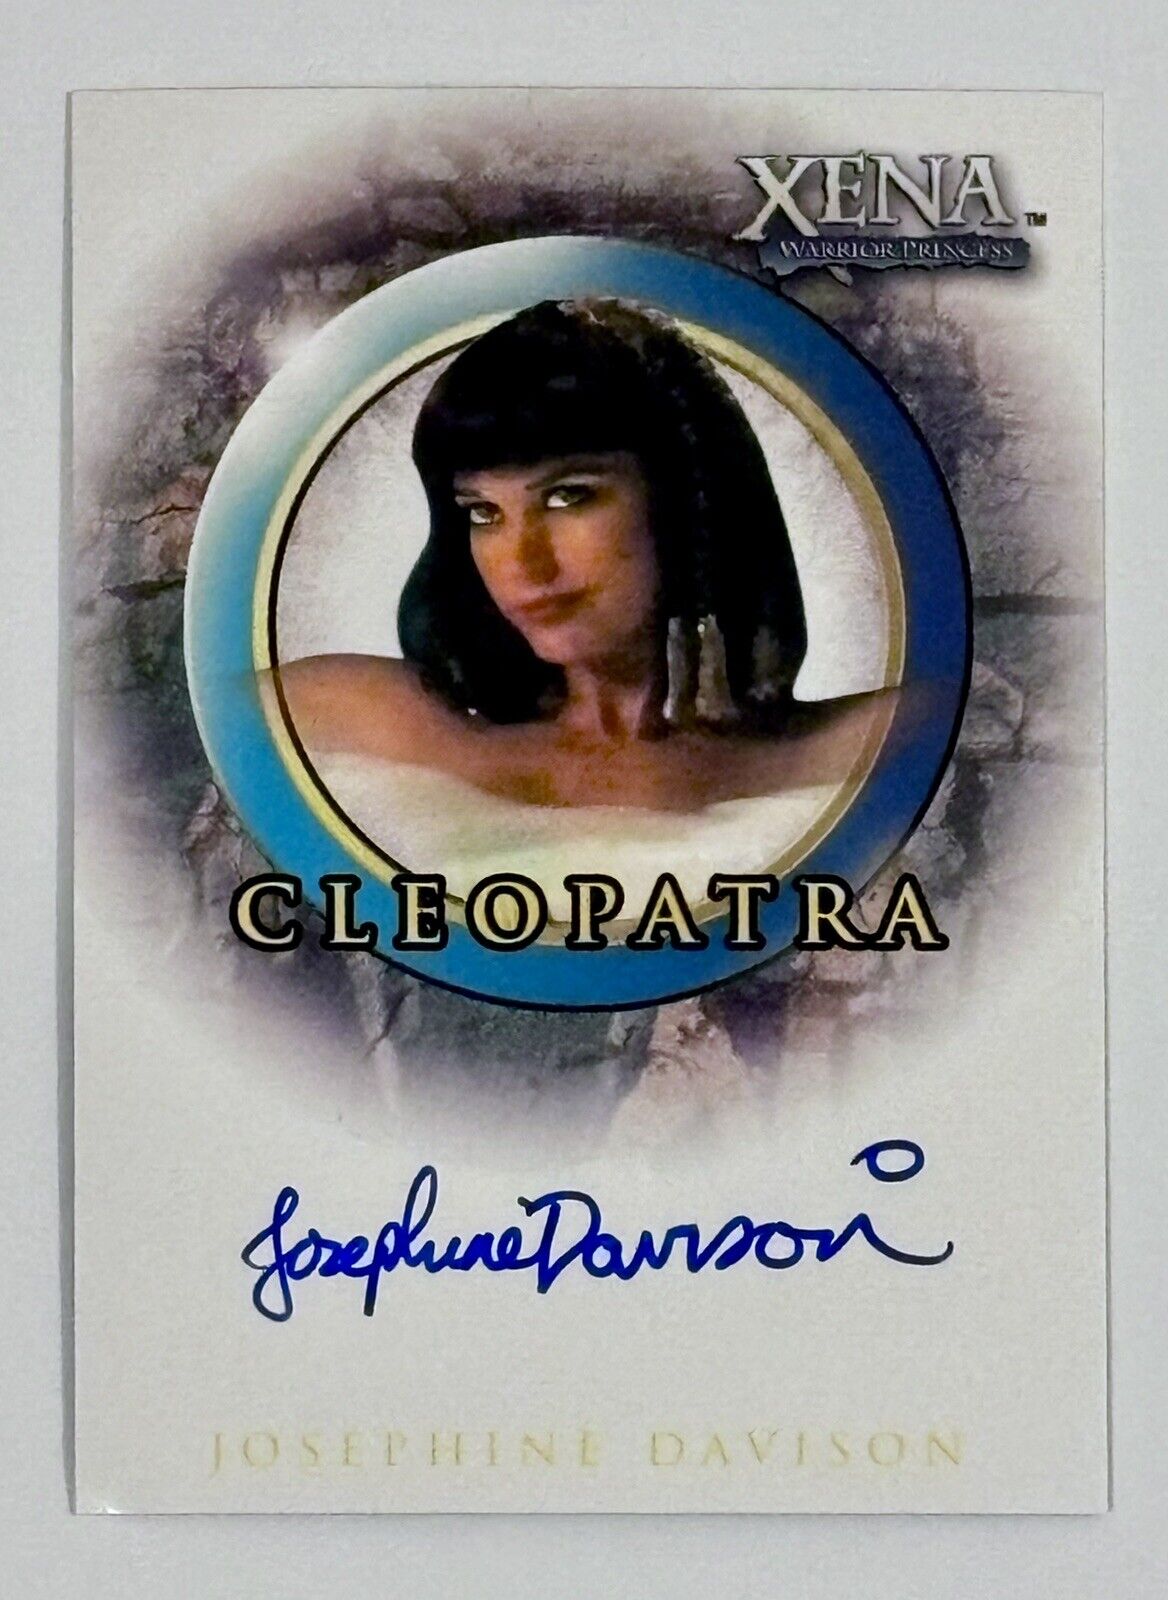 Rittenhouse Xena Cleopatra Josephine Davison Autograph Card